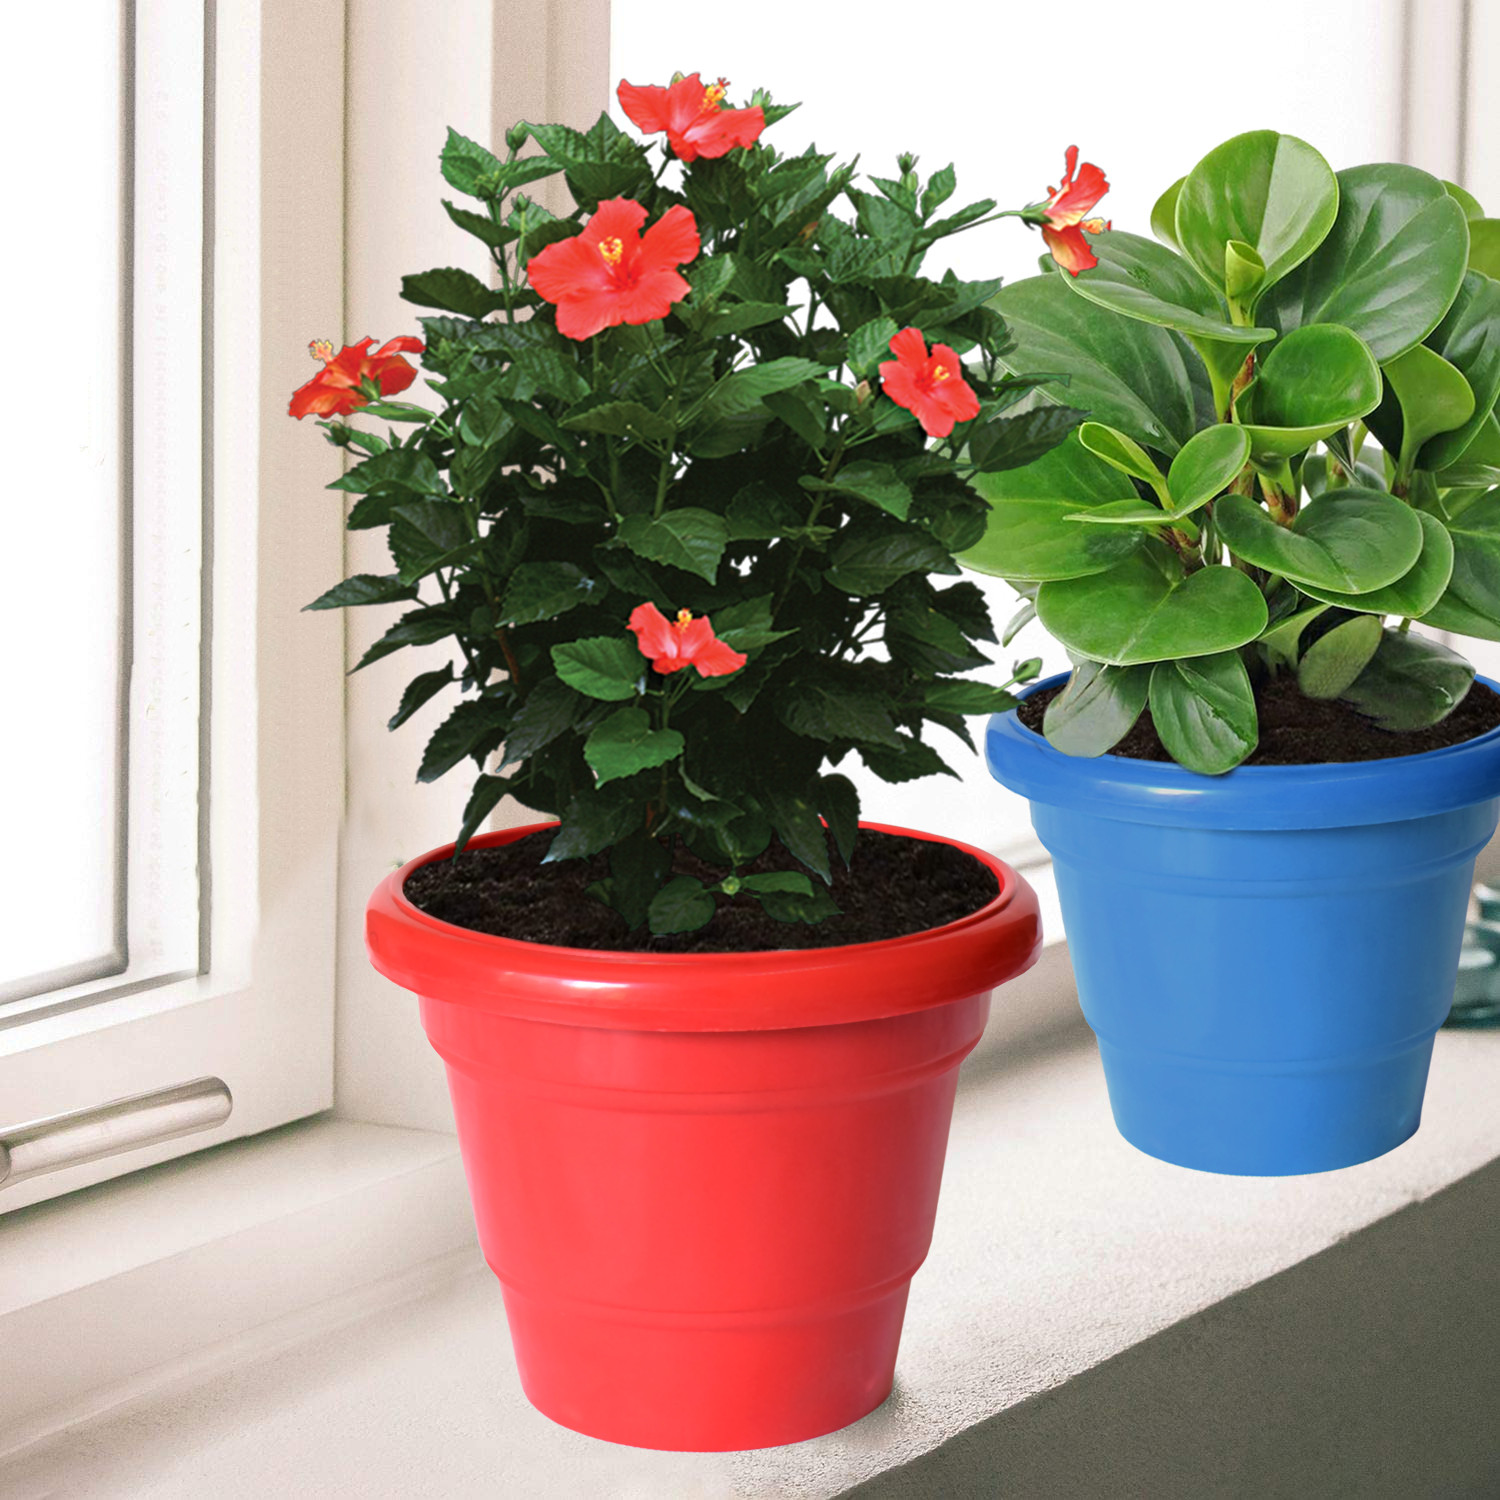 Kuber Industries Solid 2 Layered Plastic Flower Pot|Gamla For Home Decor,Nursery,Balcony,Garden,8